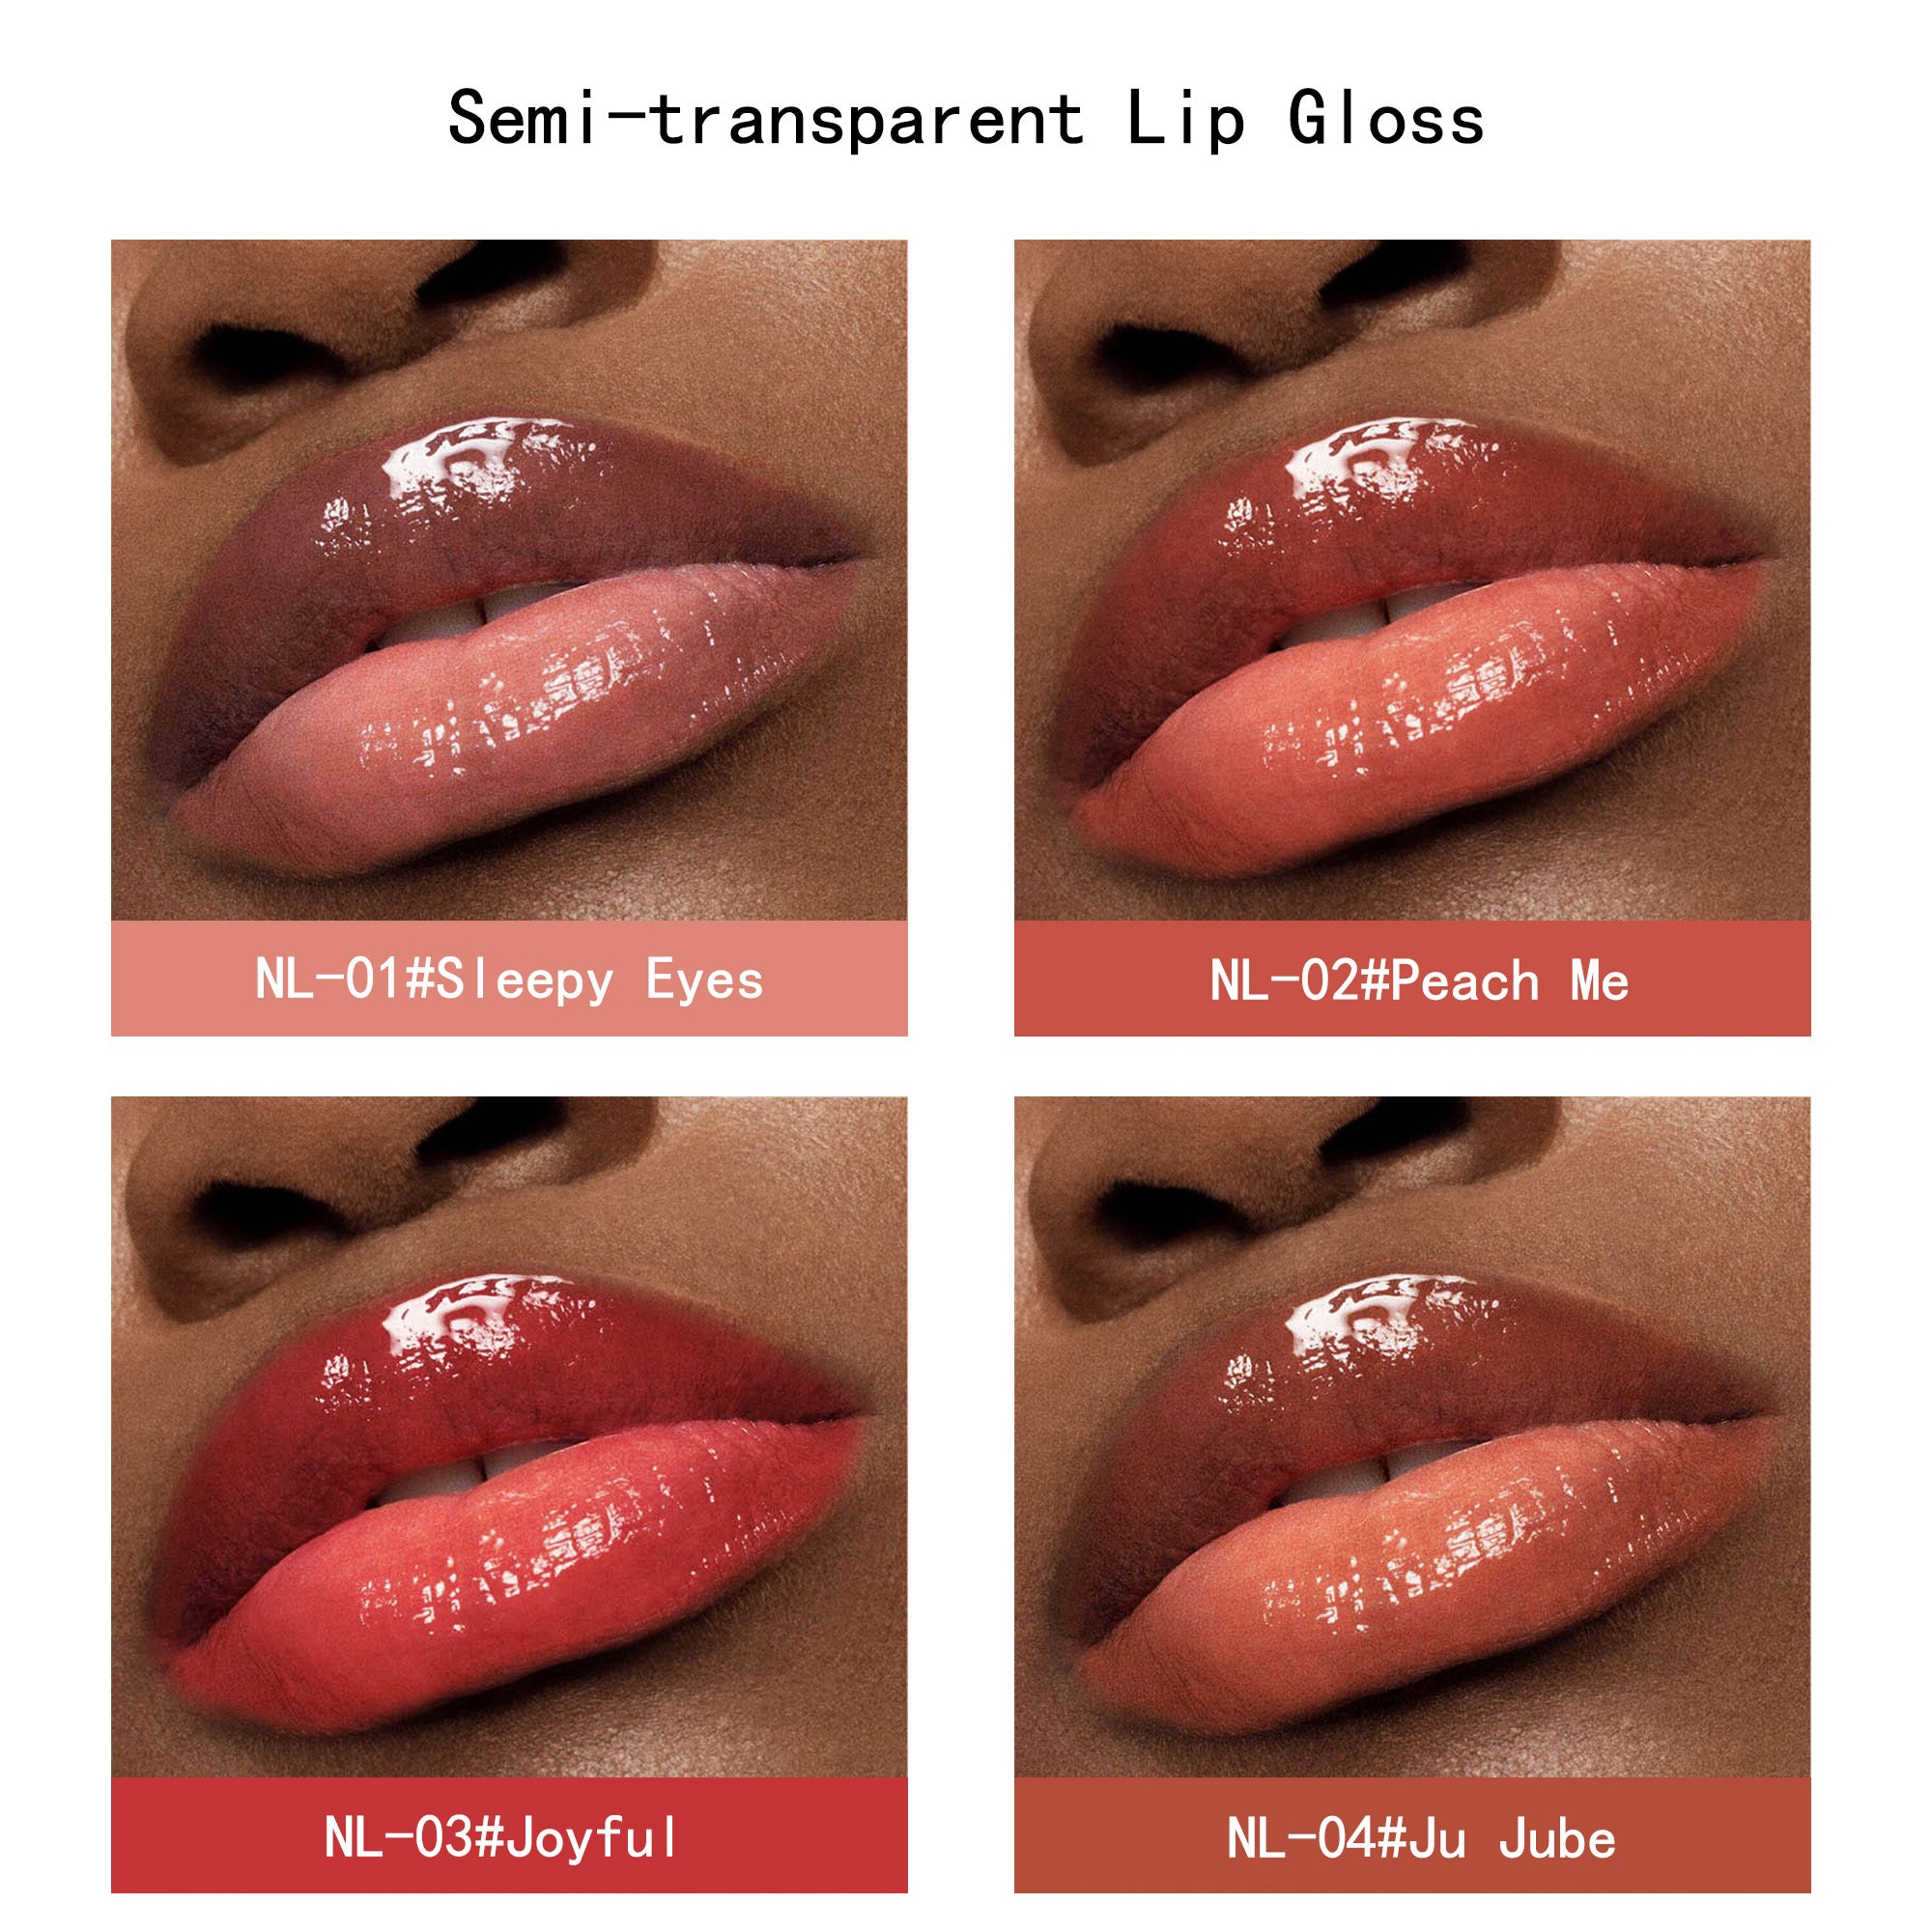 Semi-transparent Lip Gloss